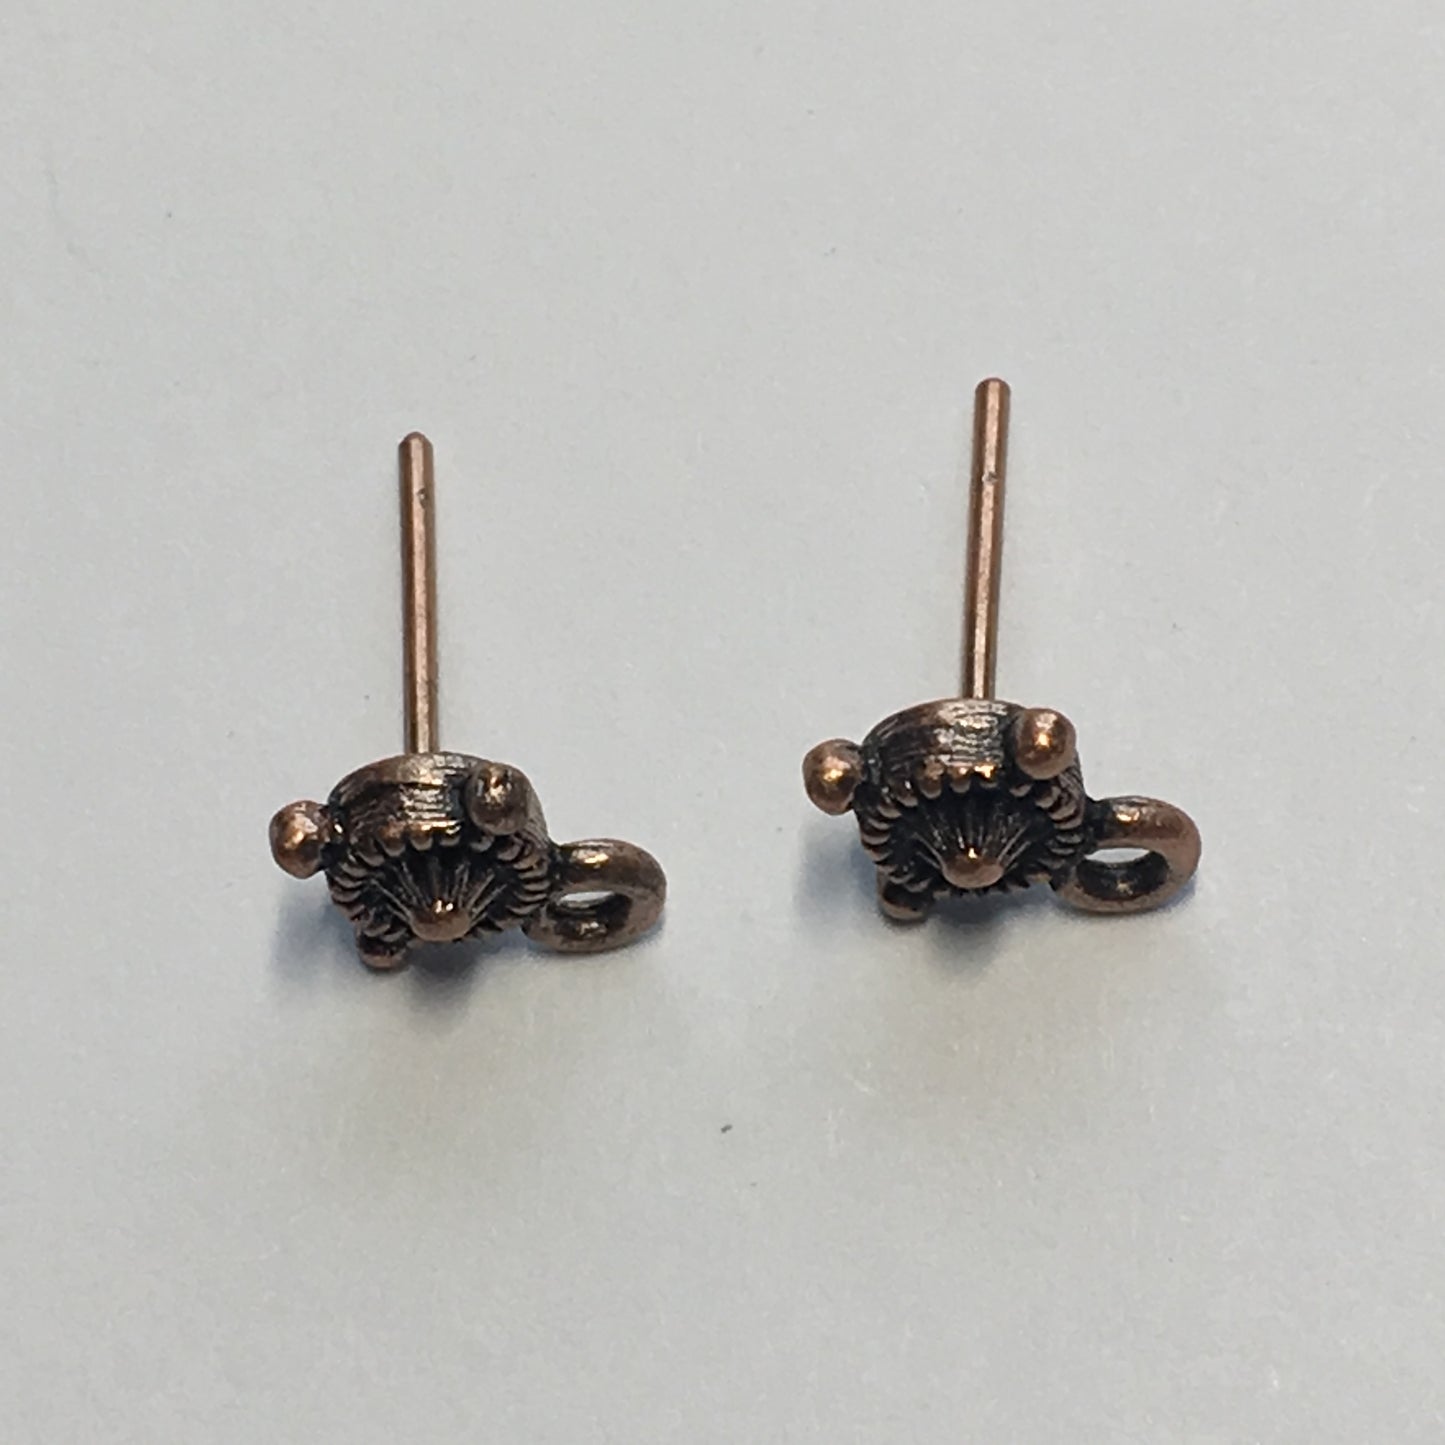 Antique Copper Ear Posts, 10 mm Long, 10 mm Post - 1 Pair